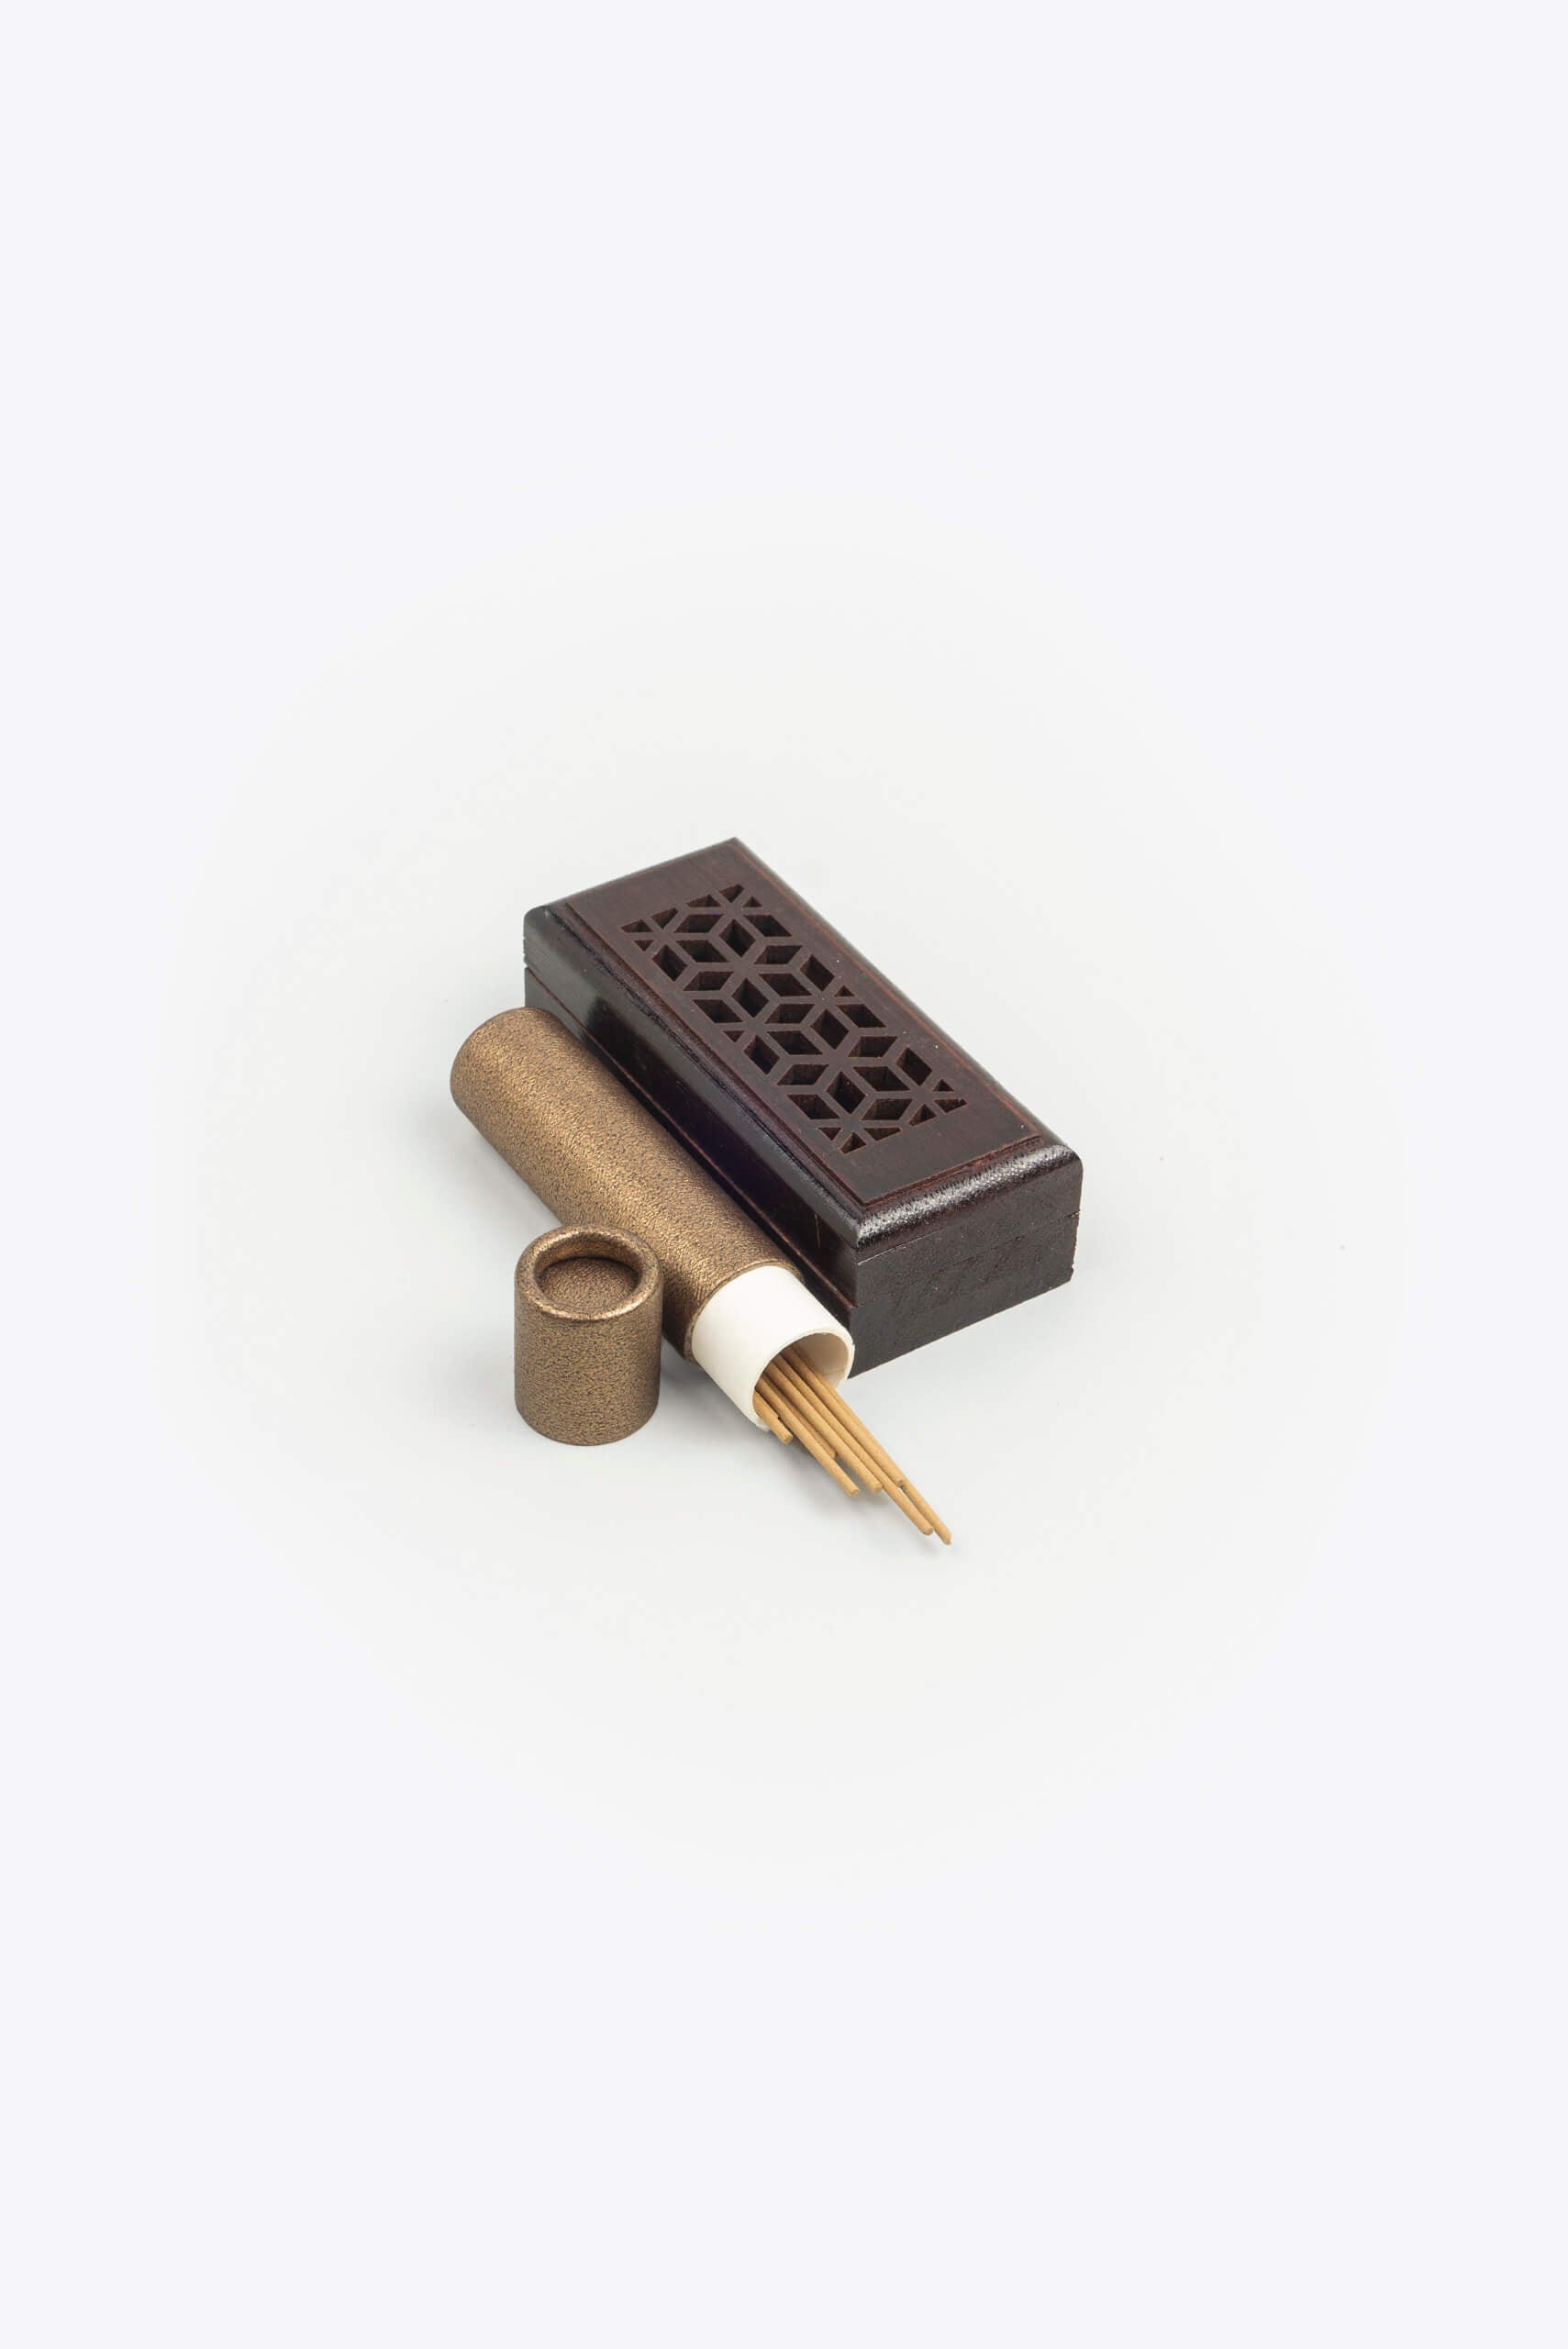 Mini Wooden Sticks Incense Set - Incense - Muslim Lifestyle Store